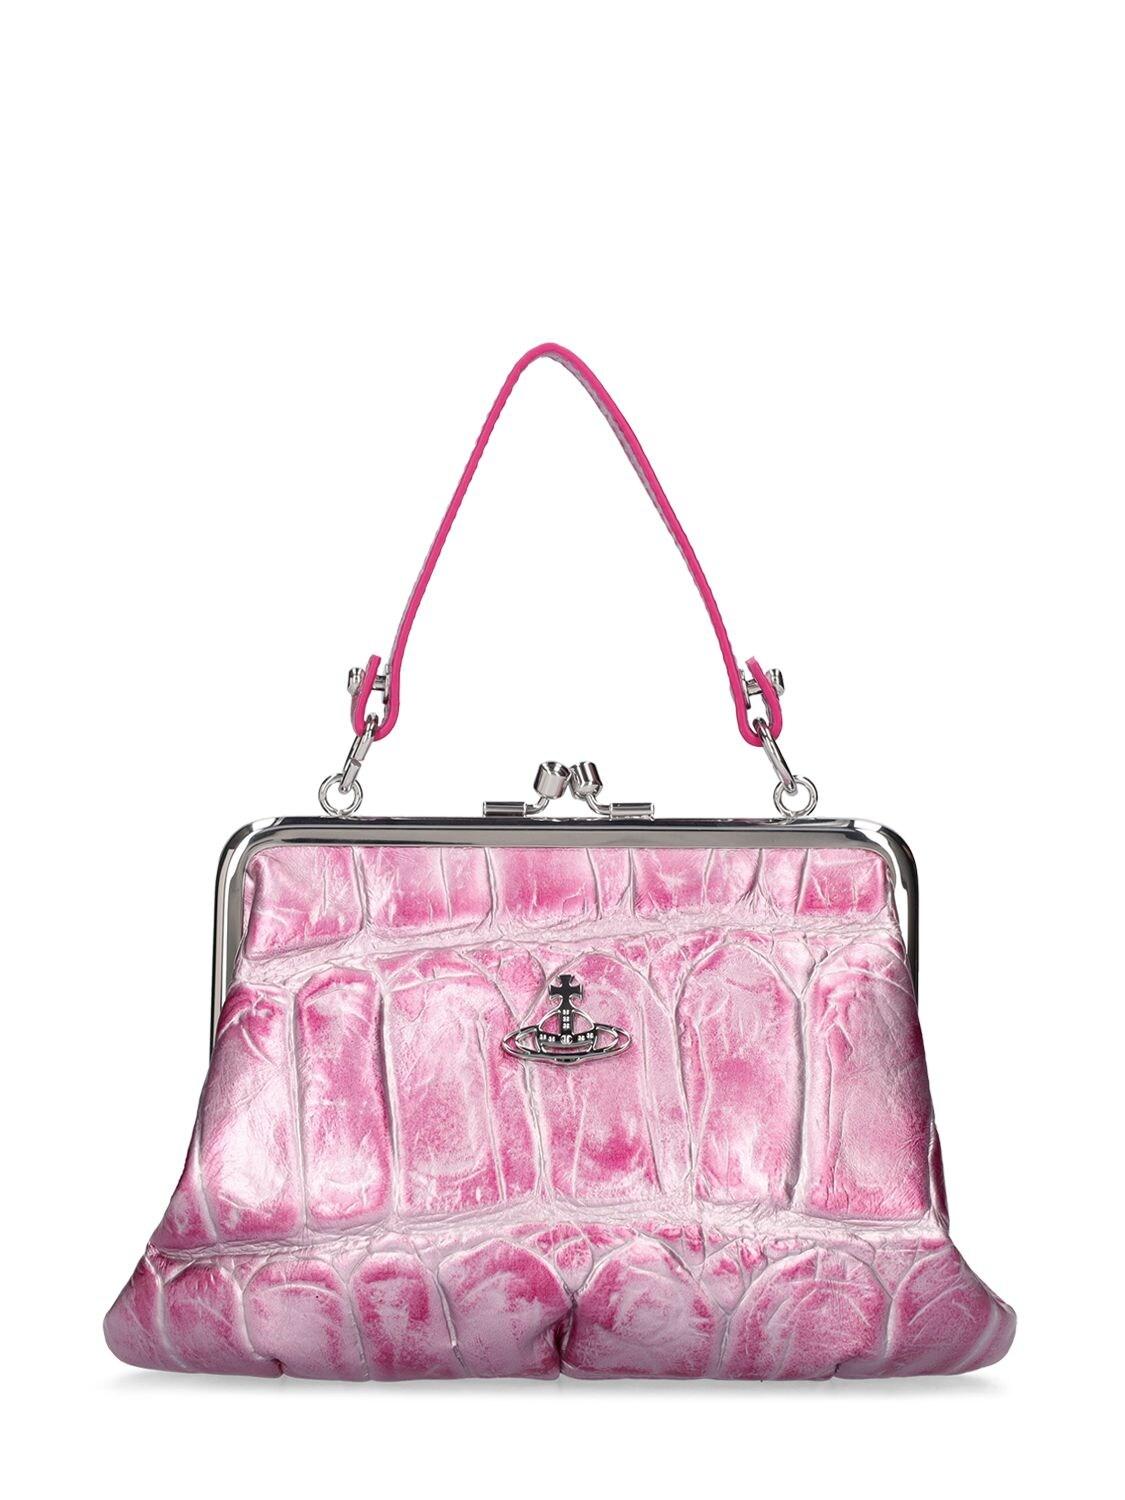 Vivienne Westwood Granny Frame Leather Top Handle Bag in Pink | Lyst UK